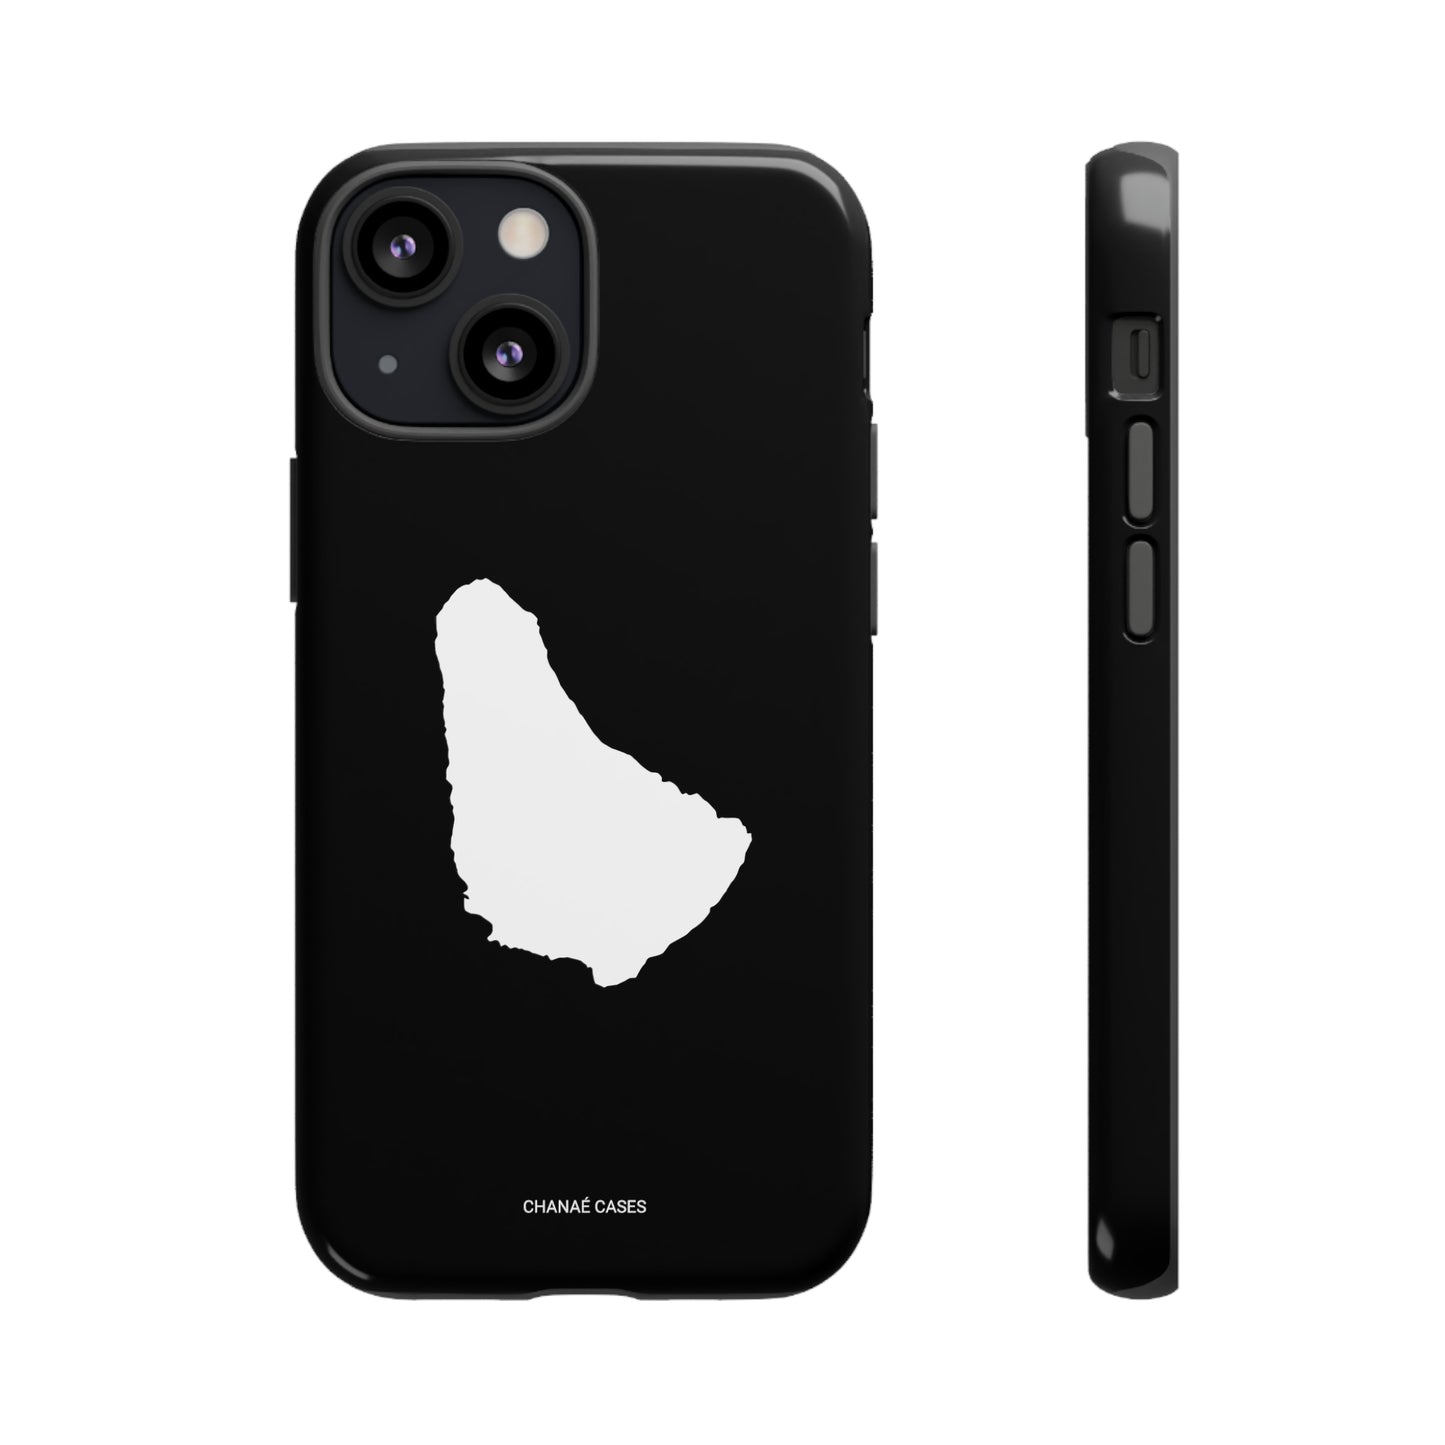 MOB iPhone "Tough" Case (Black)